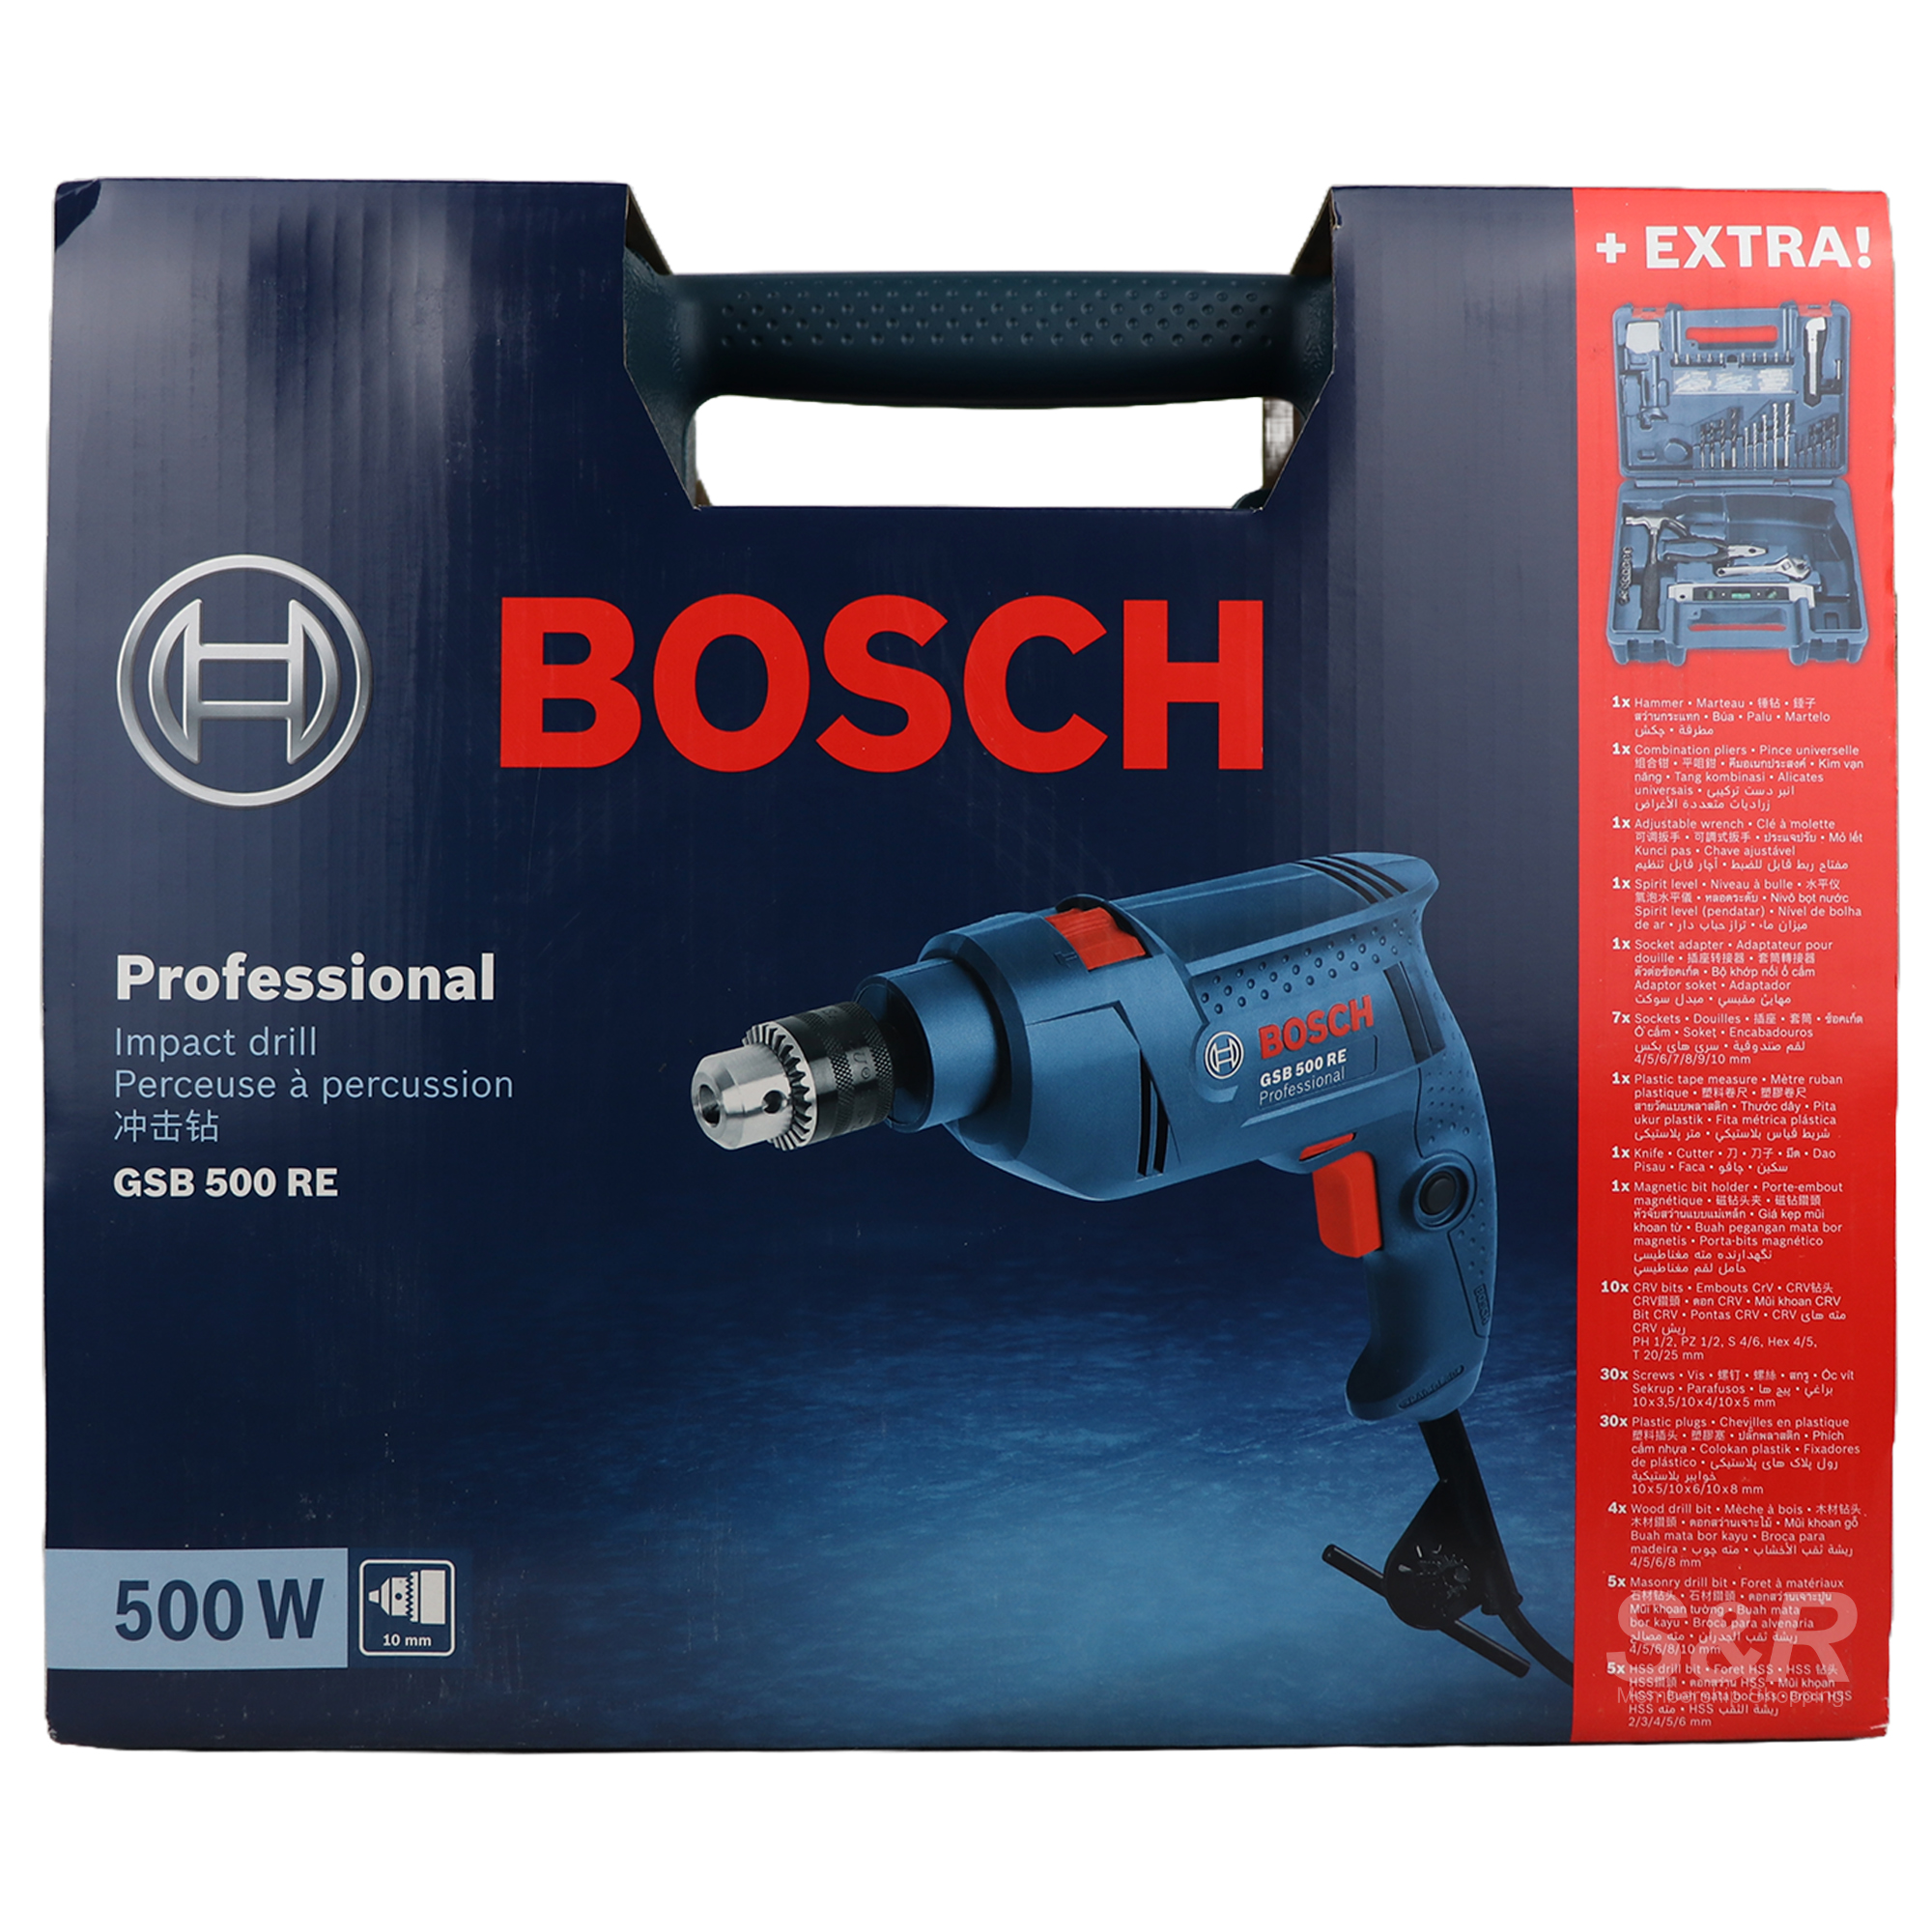 Bosch Professional Impact Drill GSB 500 RE